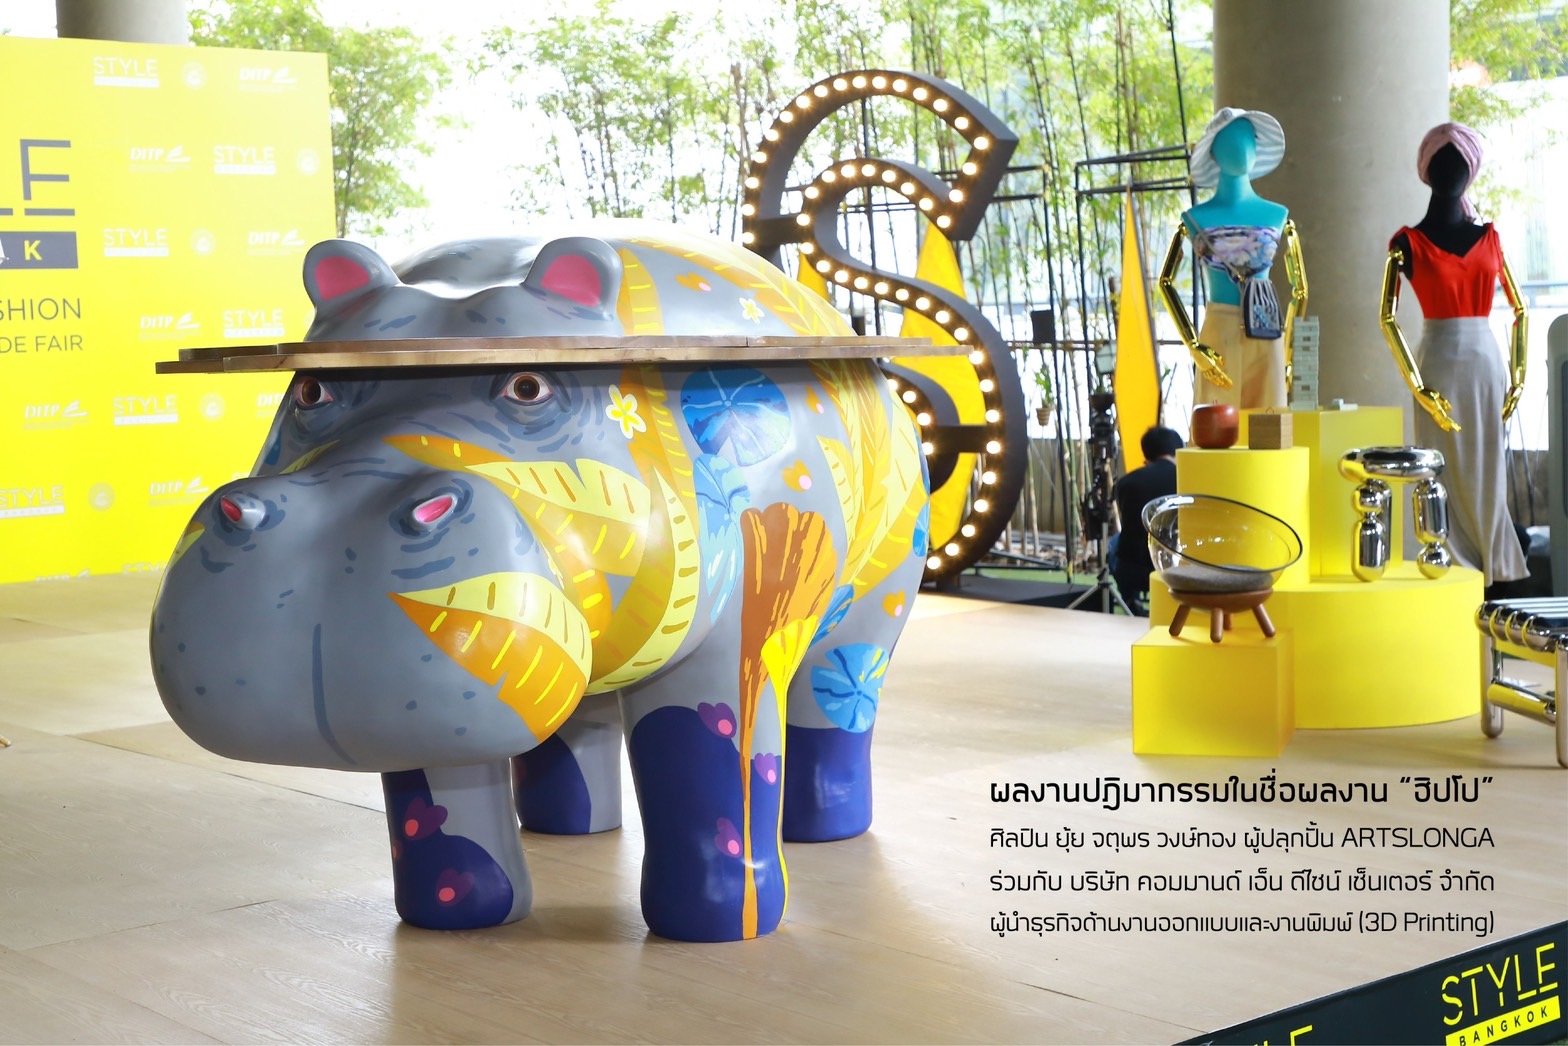 ART ZONE โชว์ 10 ผลงานไฮไลท์ พื้นที่สร้างสรรค์ ต่อยอดสินค้าไลฟ์สไตล์ของศิลปินกับผู้ส่งออกในงาน STYLE Bangkok 2023